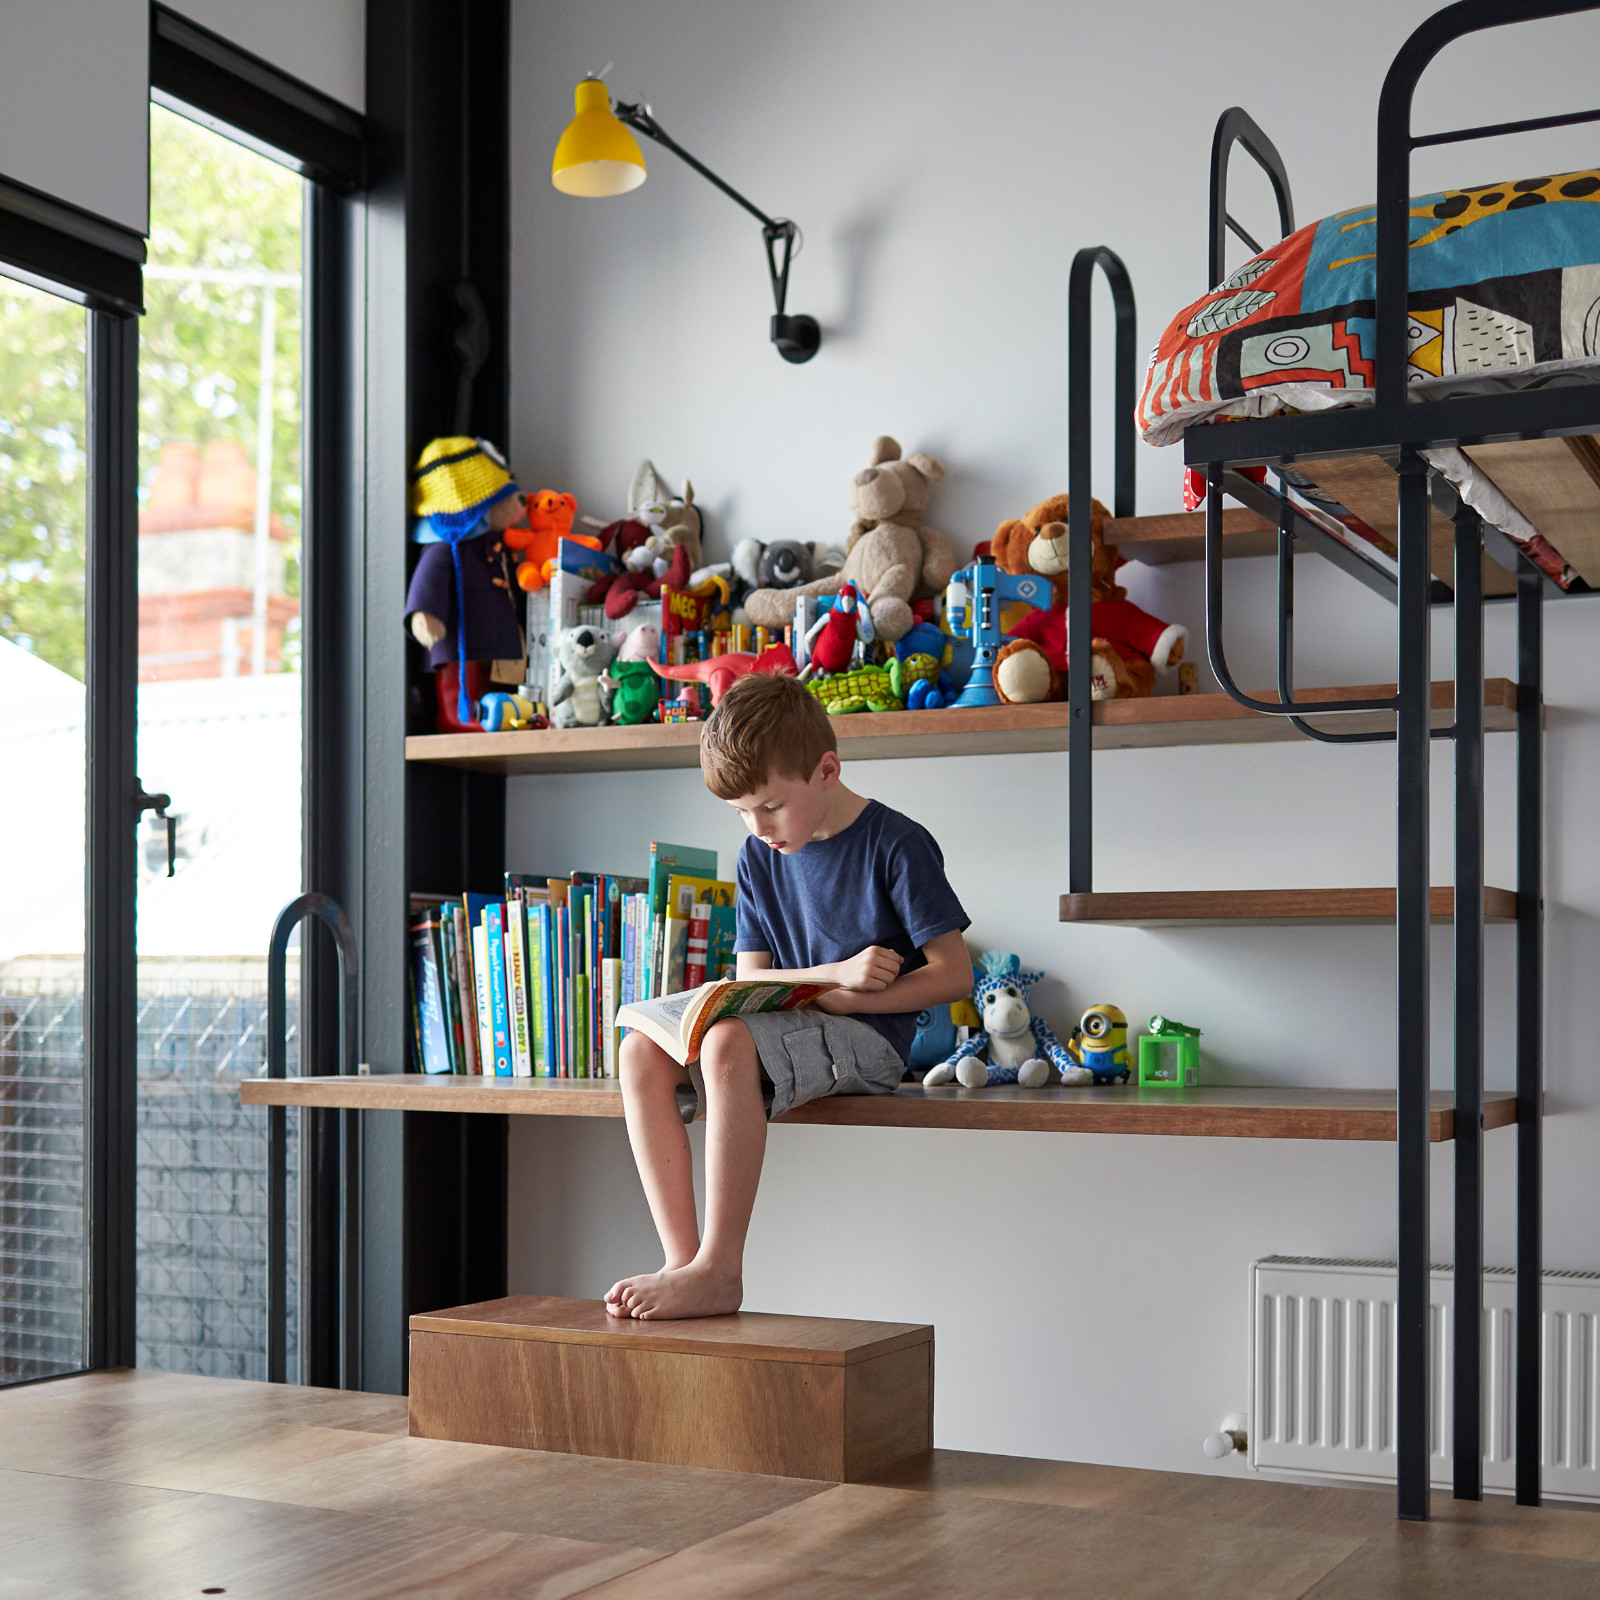 toy-management-house-austin-maynard-architects-australia-dezeen-pinterest-sq.jpg